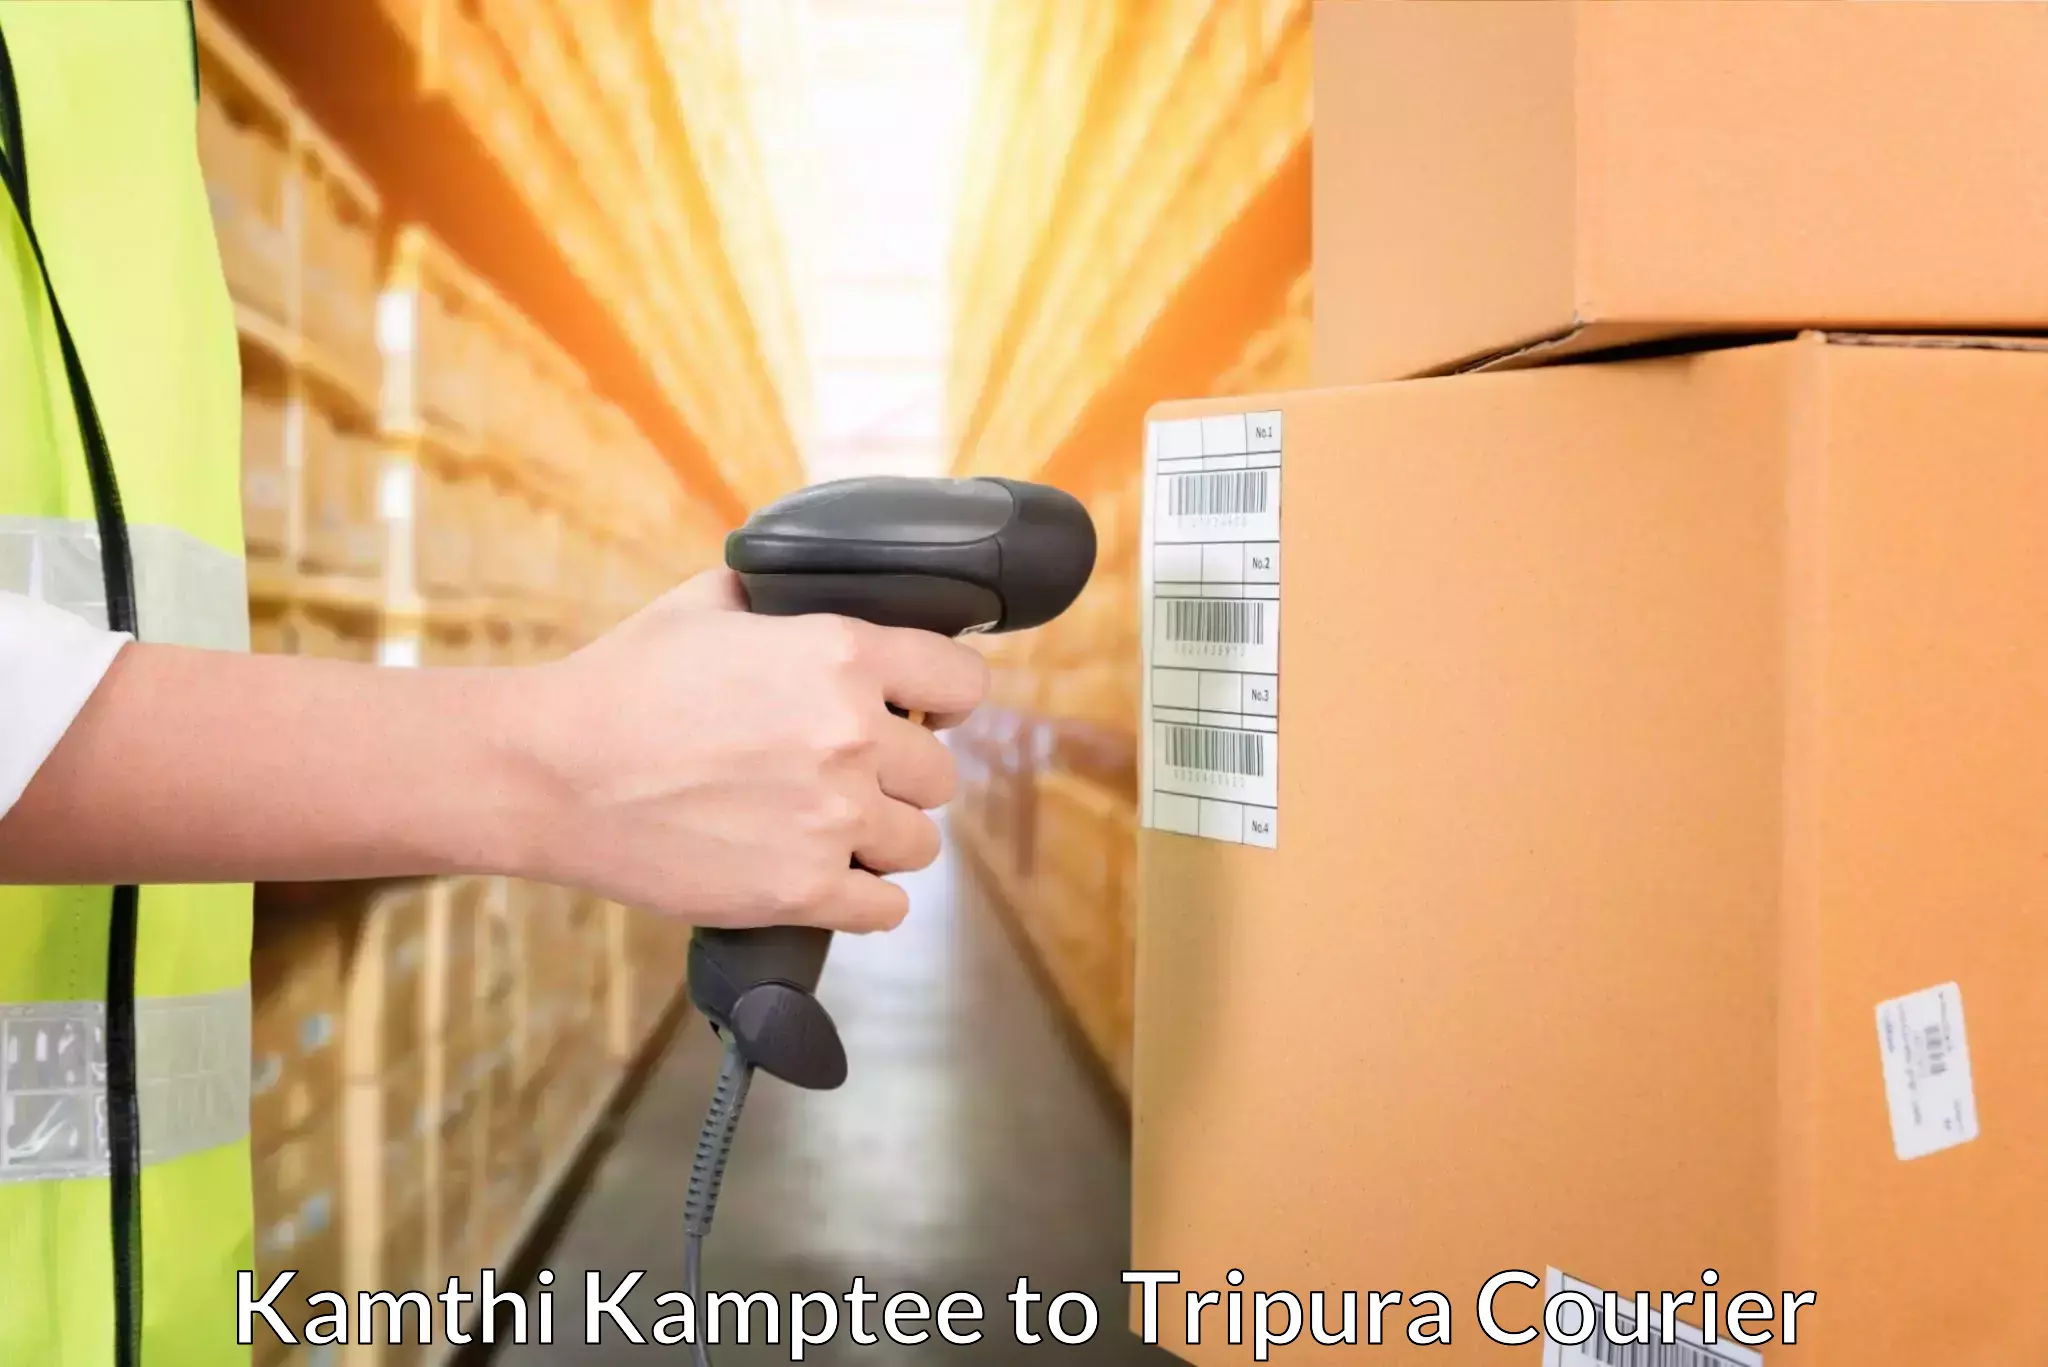 Courier service innovation Kamthi Kamptee to Tripura